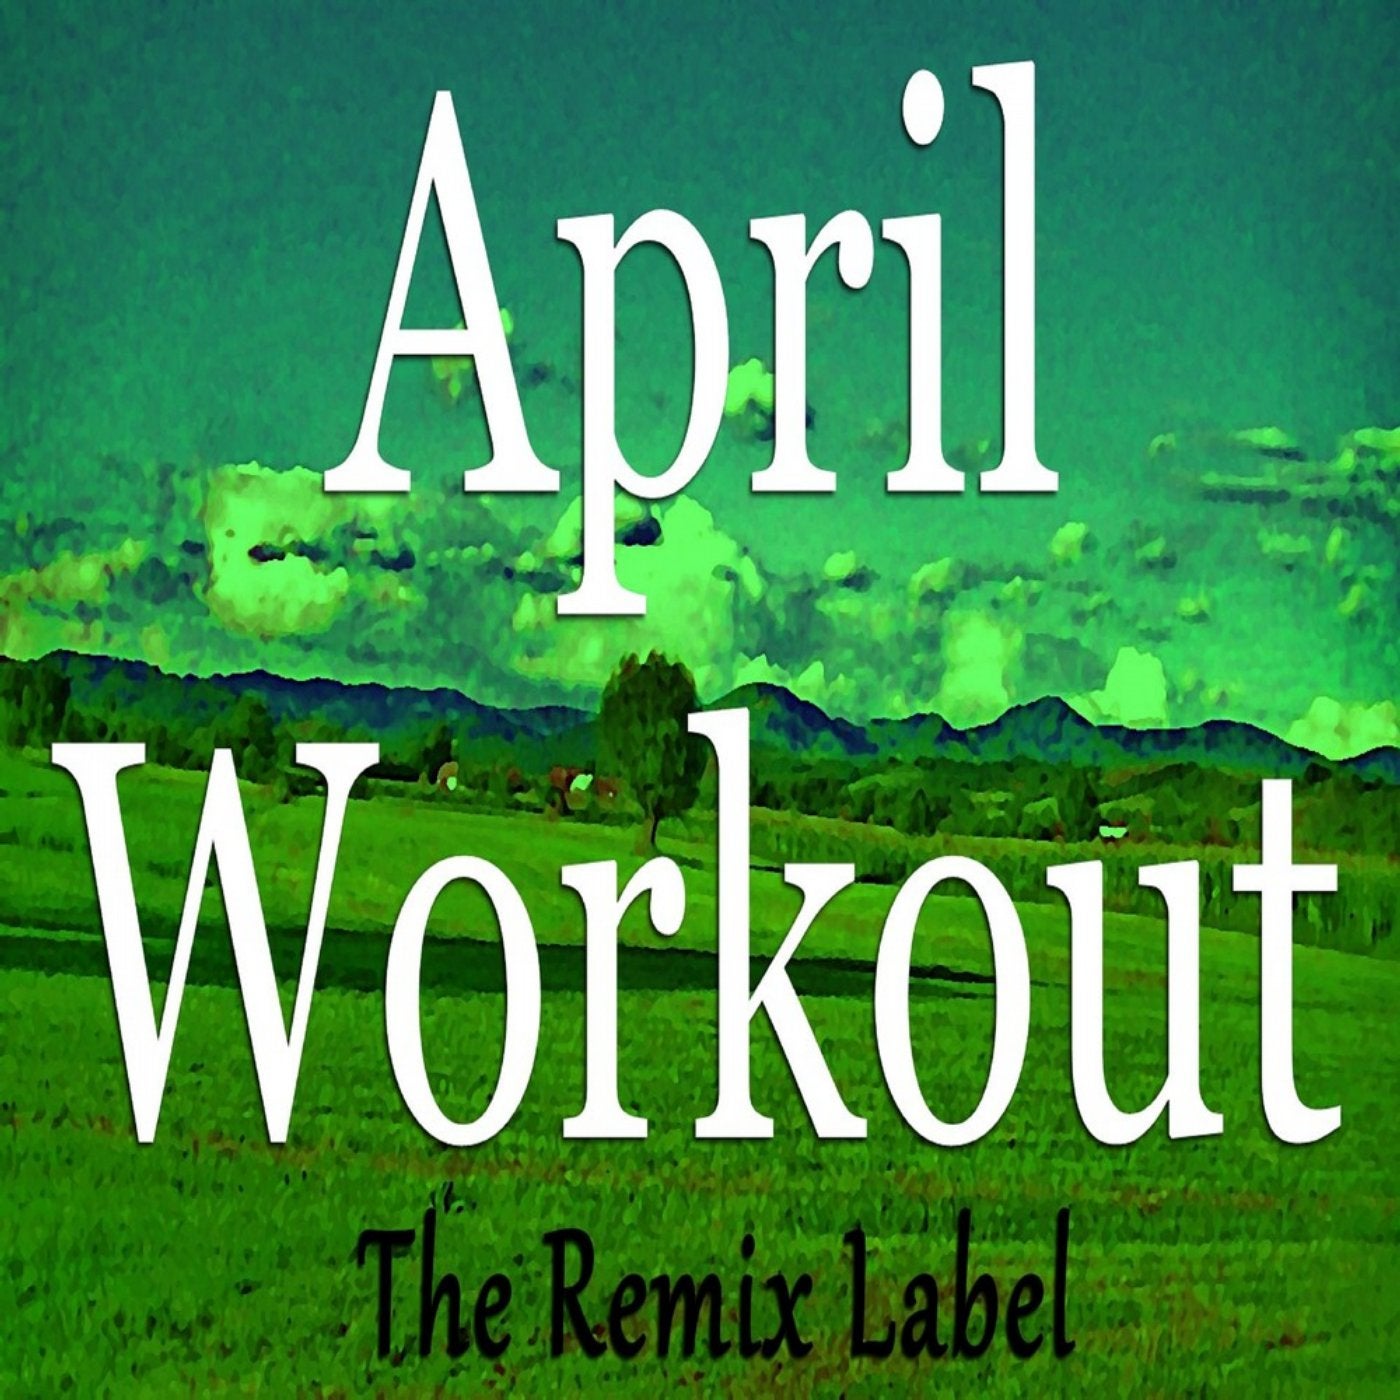 April Workout (Deep House Music for Aerobic Cardio Workout)